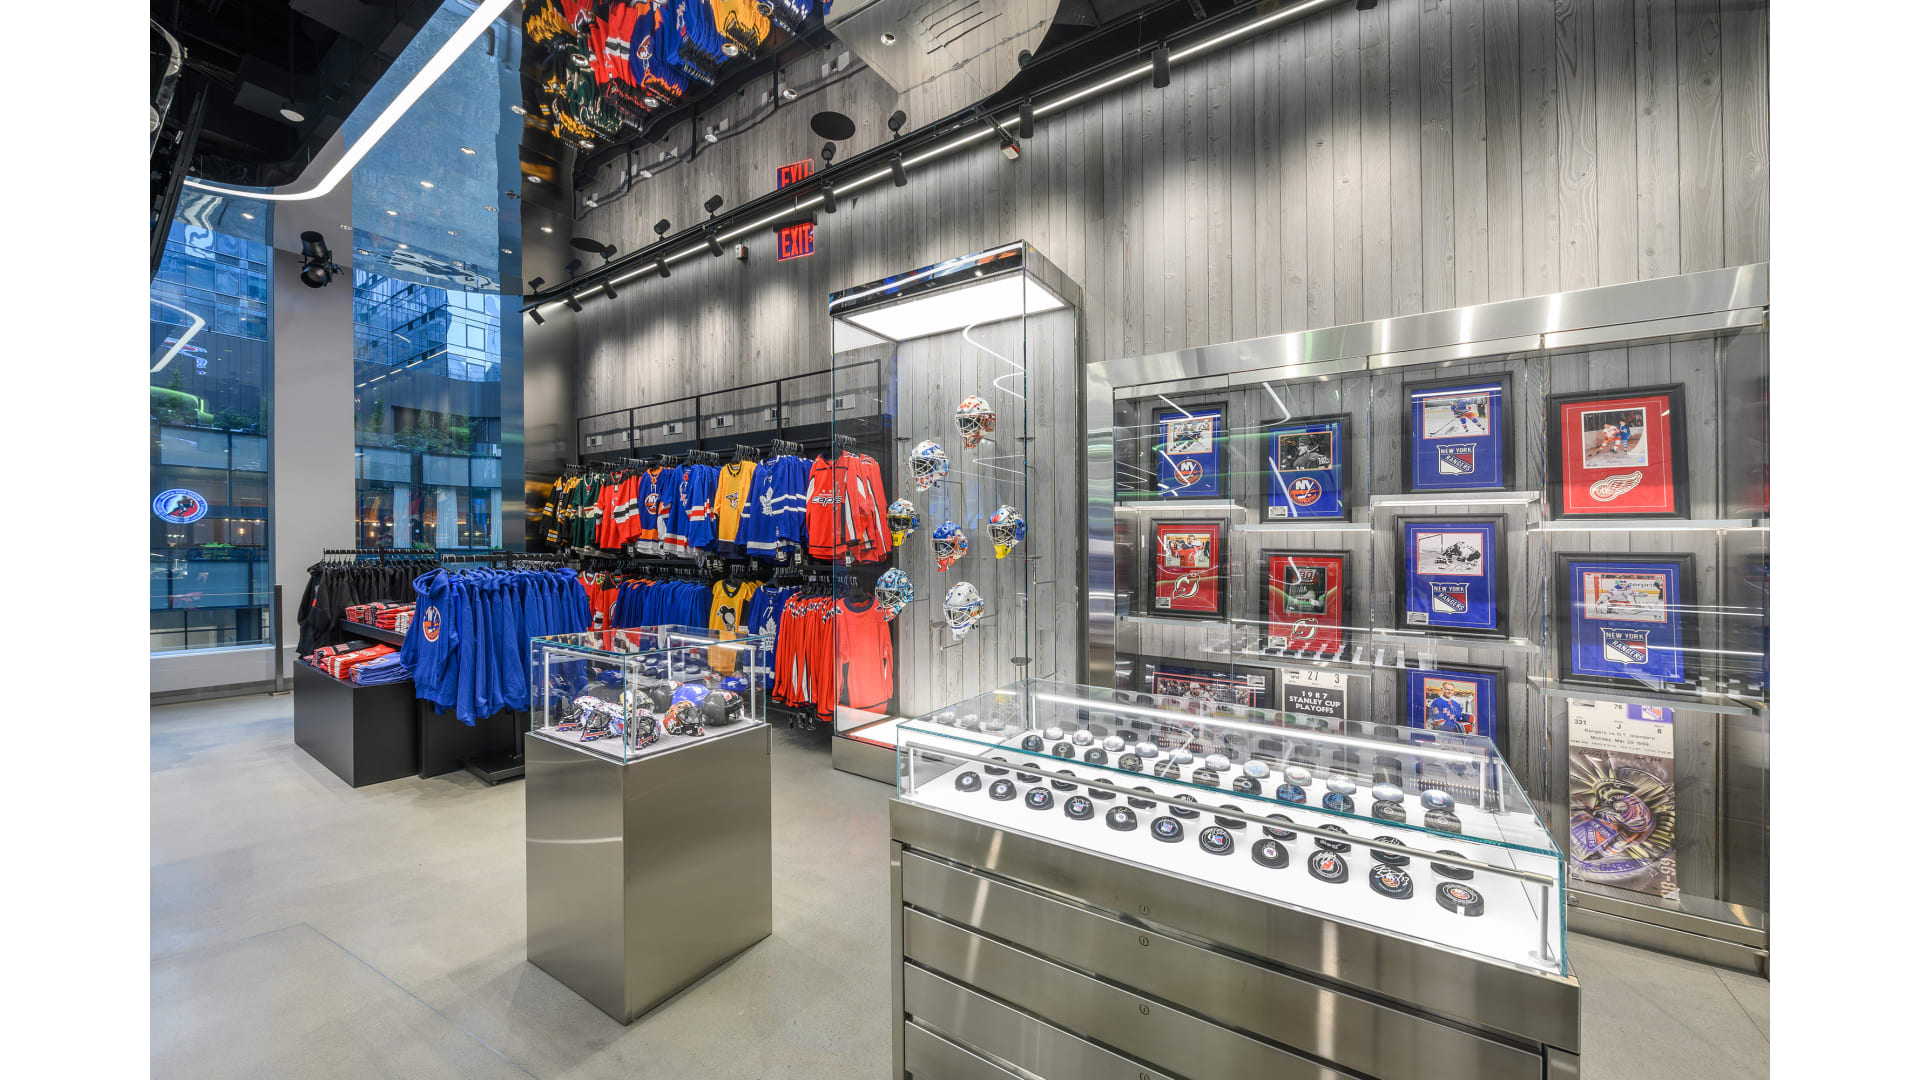 NHL Shop, NY  The national hockey league store in New York